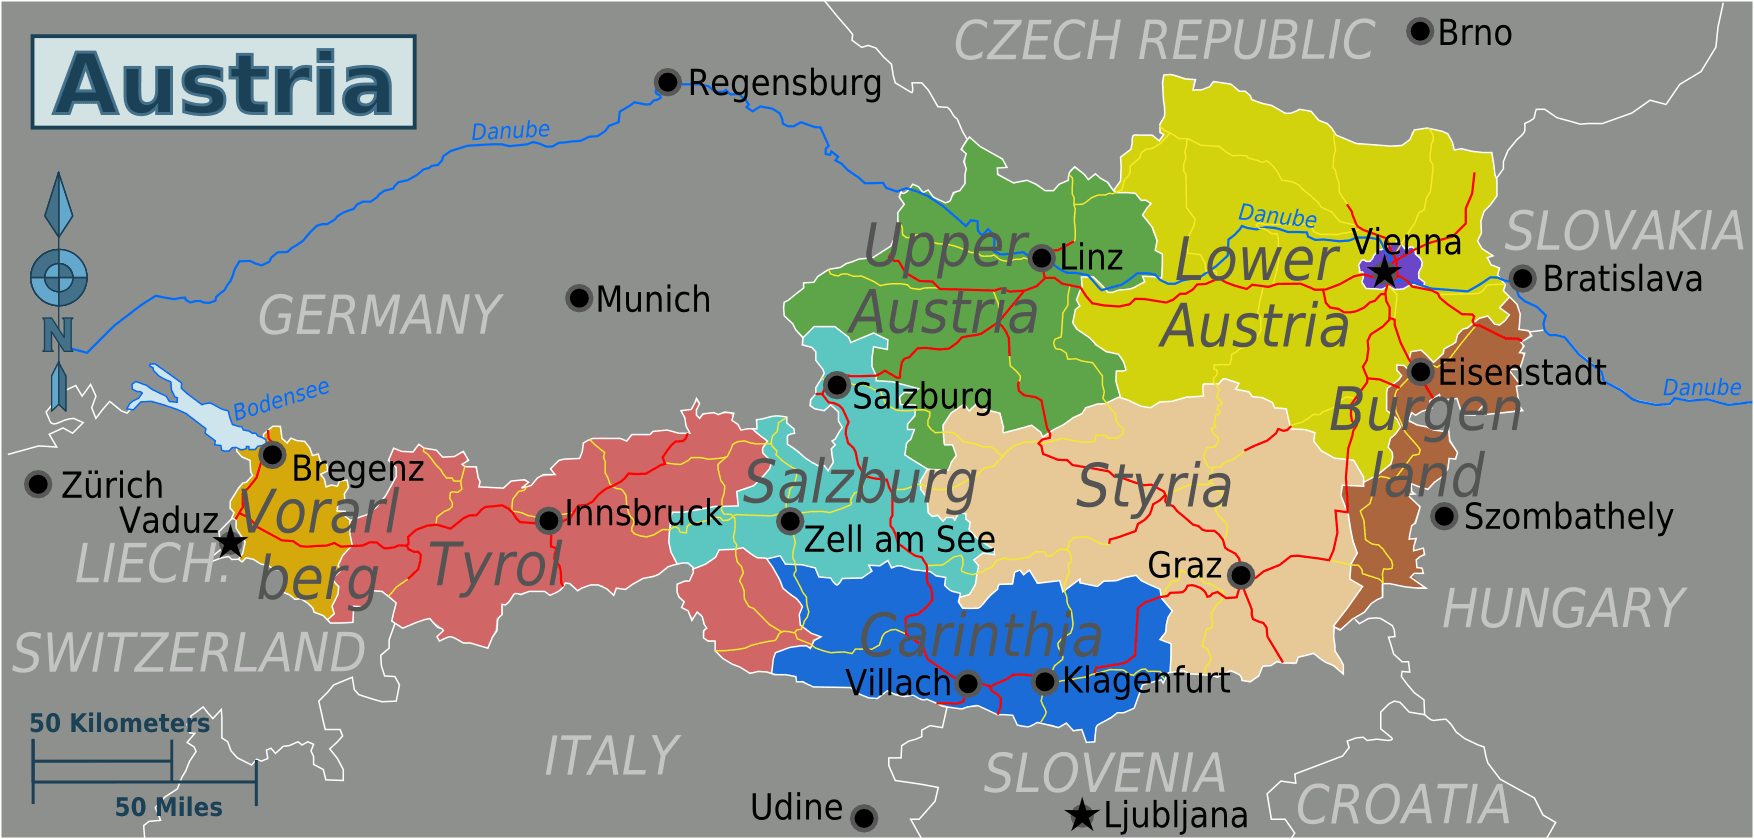 States Map of Austria